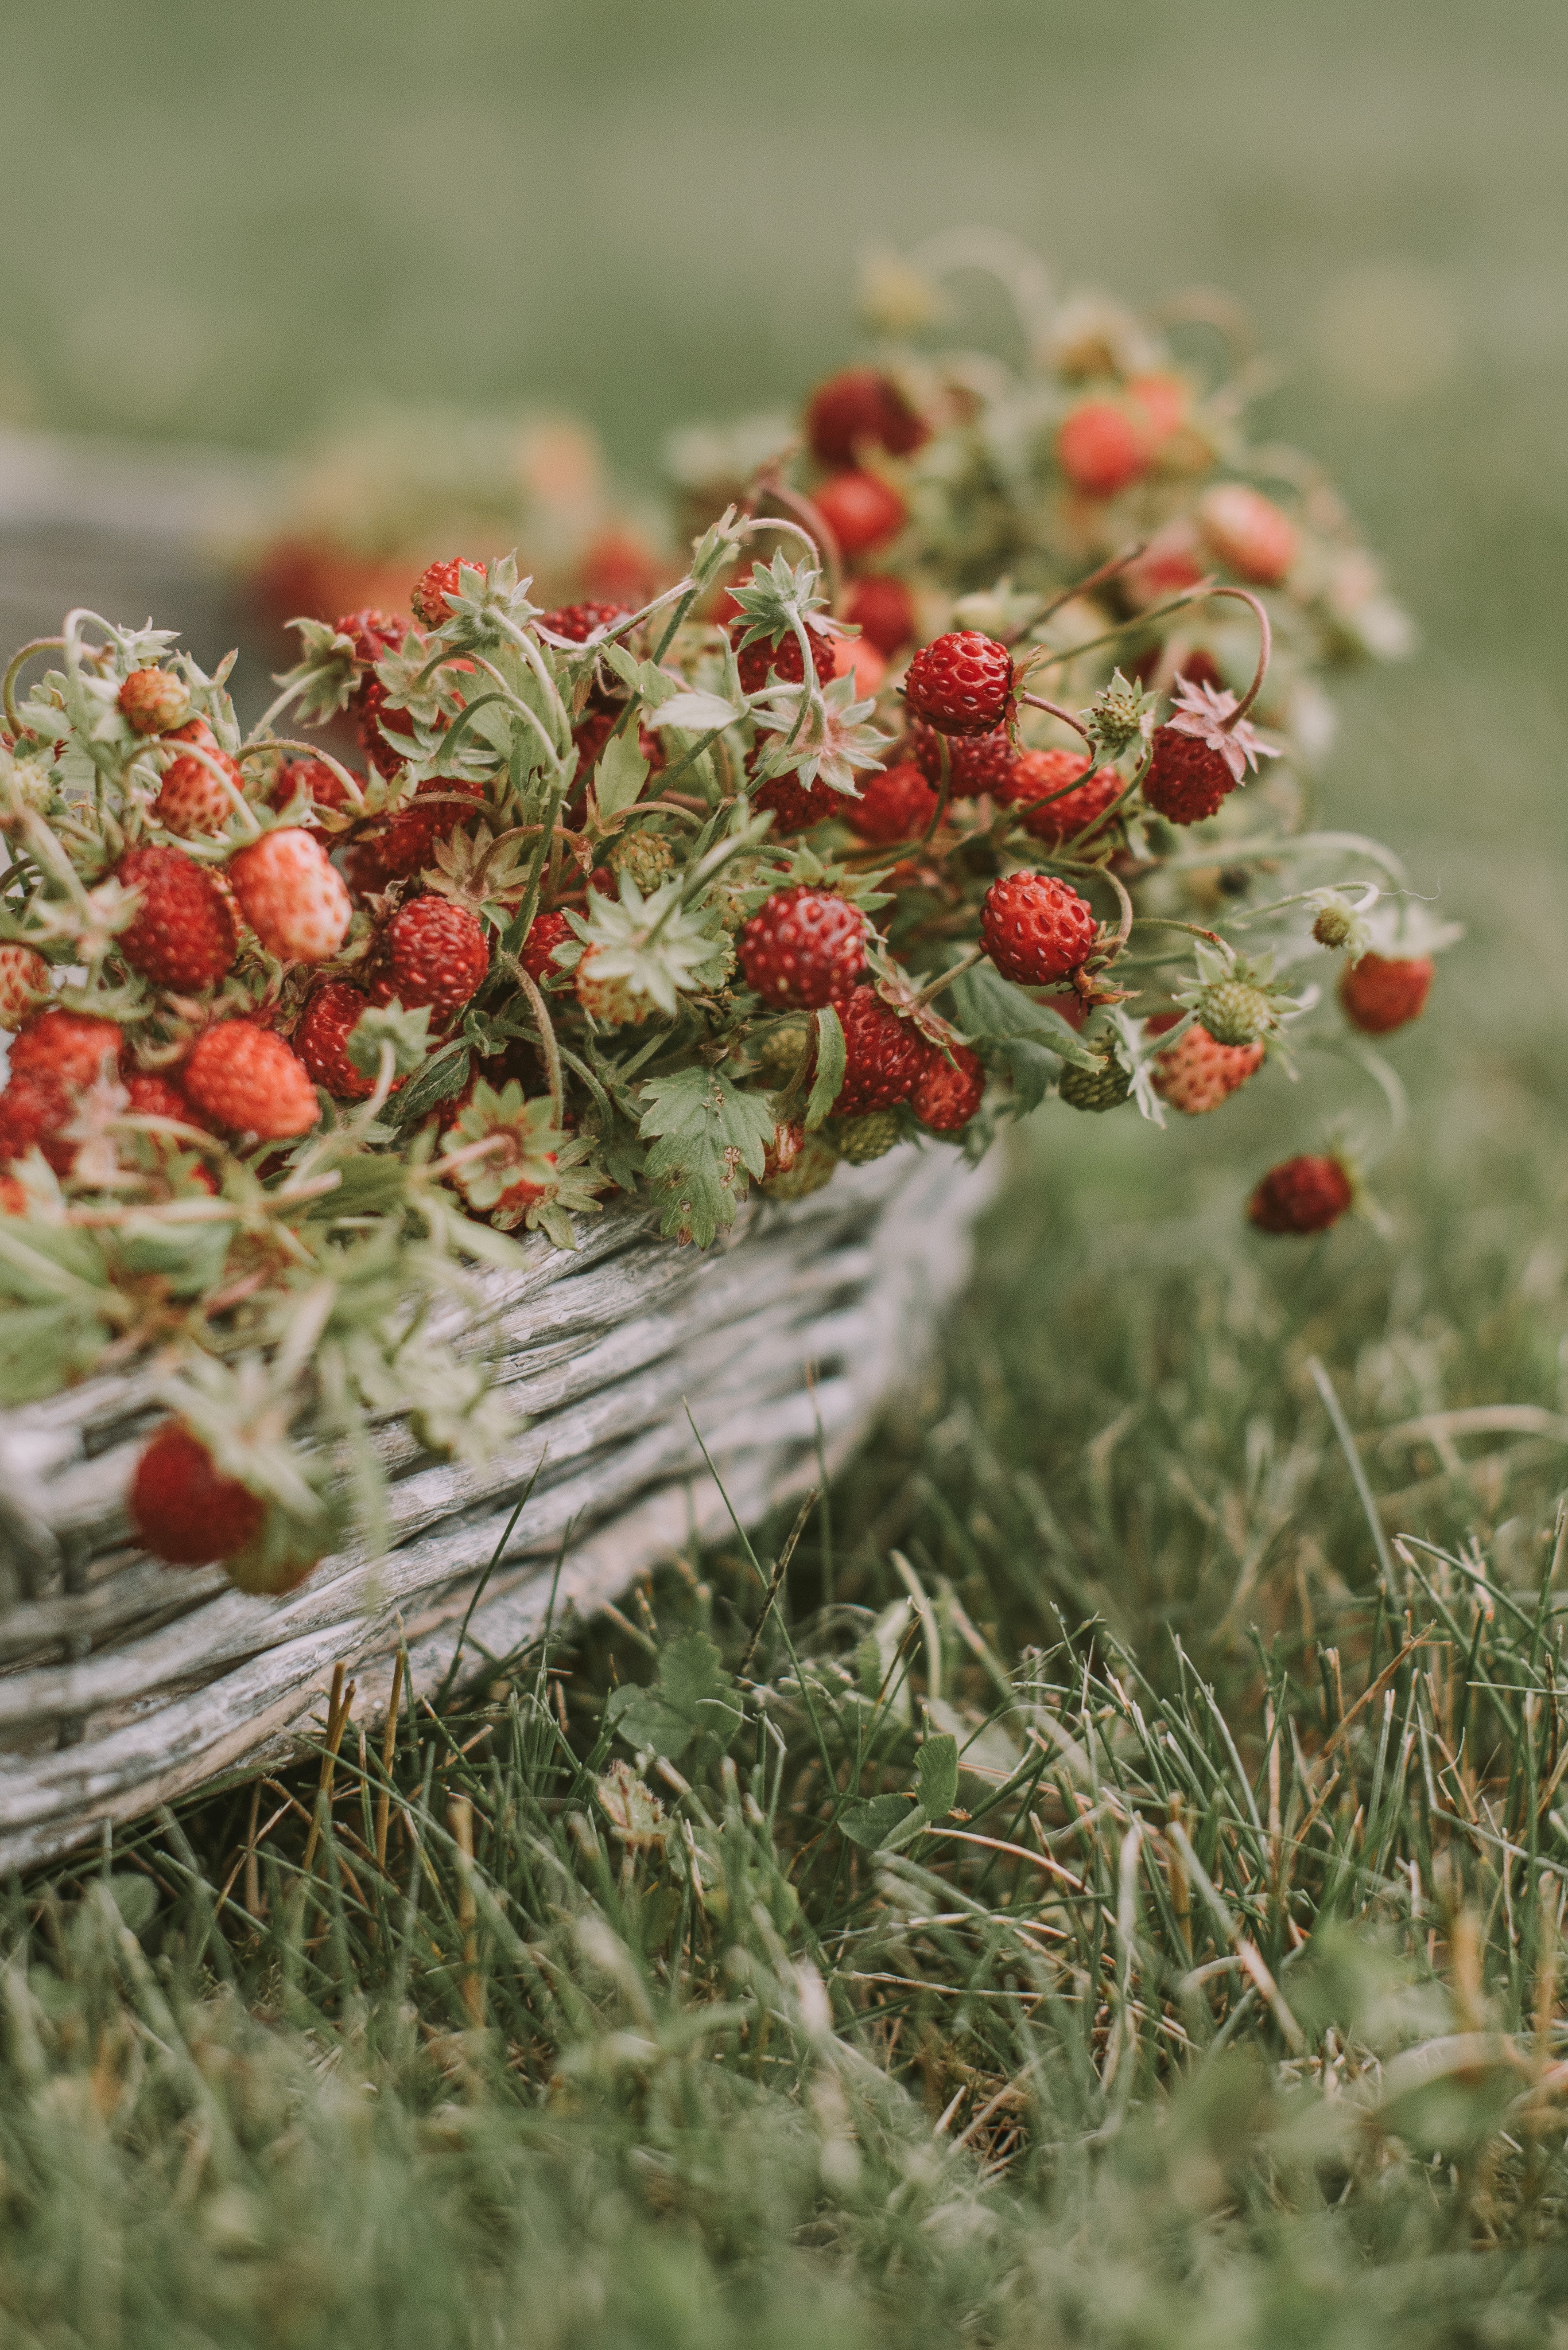 137893 Hintergrundbild herunterladen lebensmittel, erdbeere, grass, berries, korb, reif, wilde erdbeeren - Bildschirmschoner und Bilder kostenlos